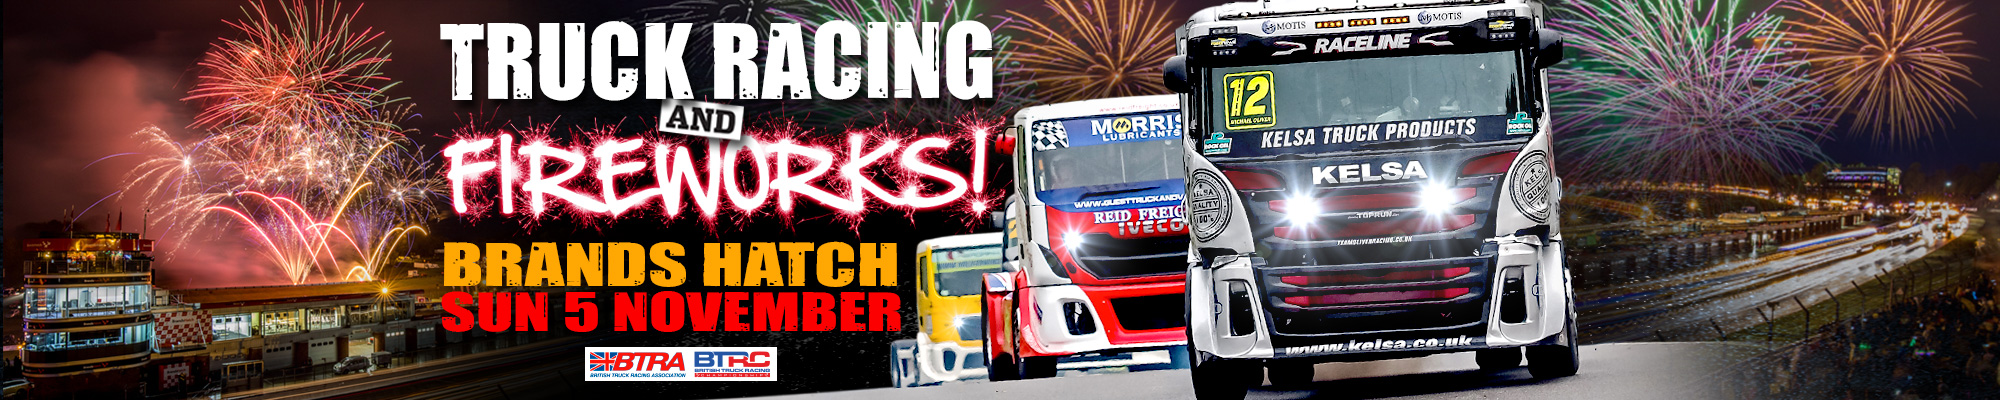 British Truck Racing Championship & Fireworks